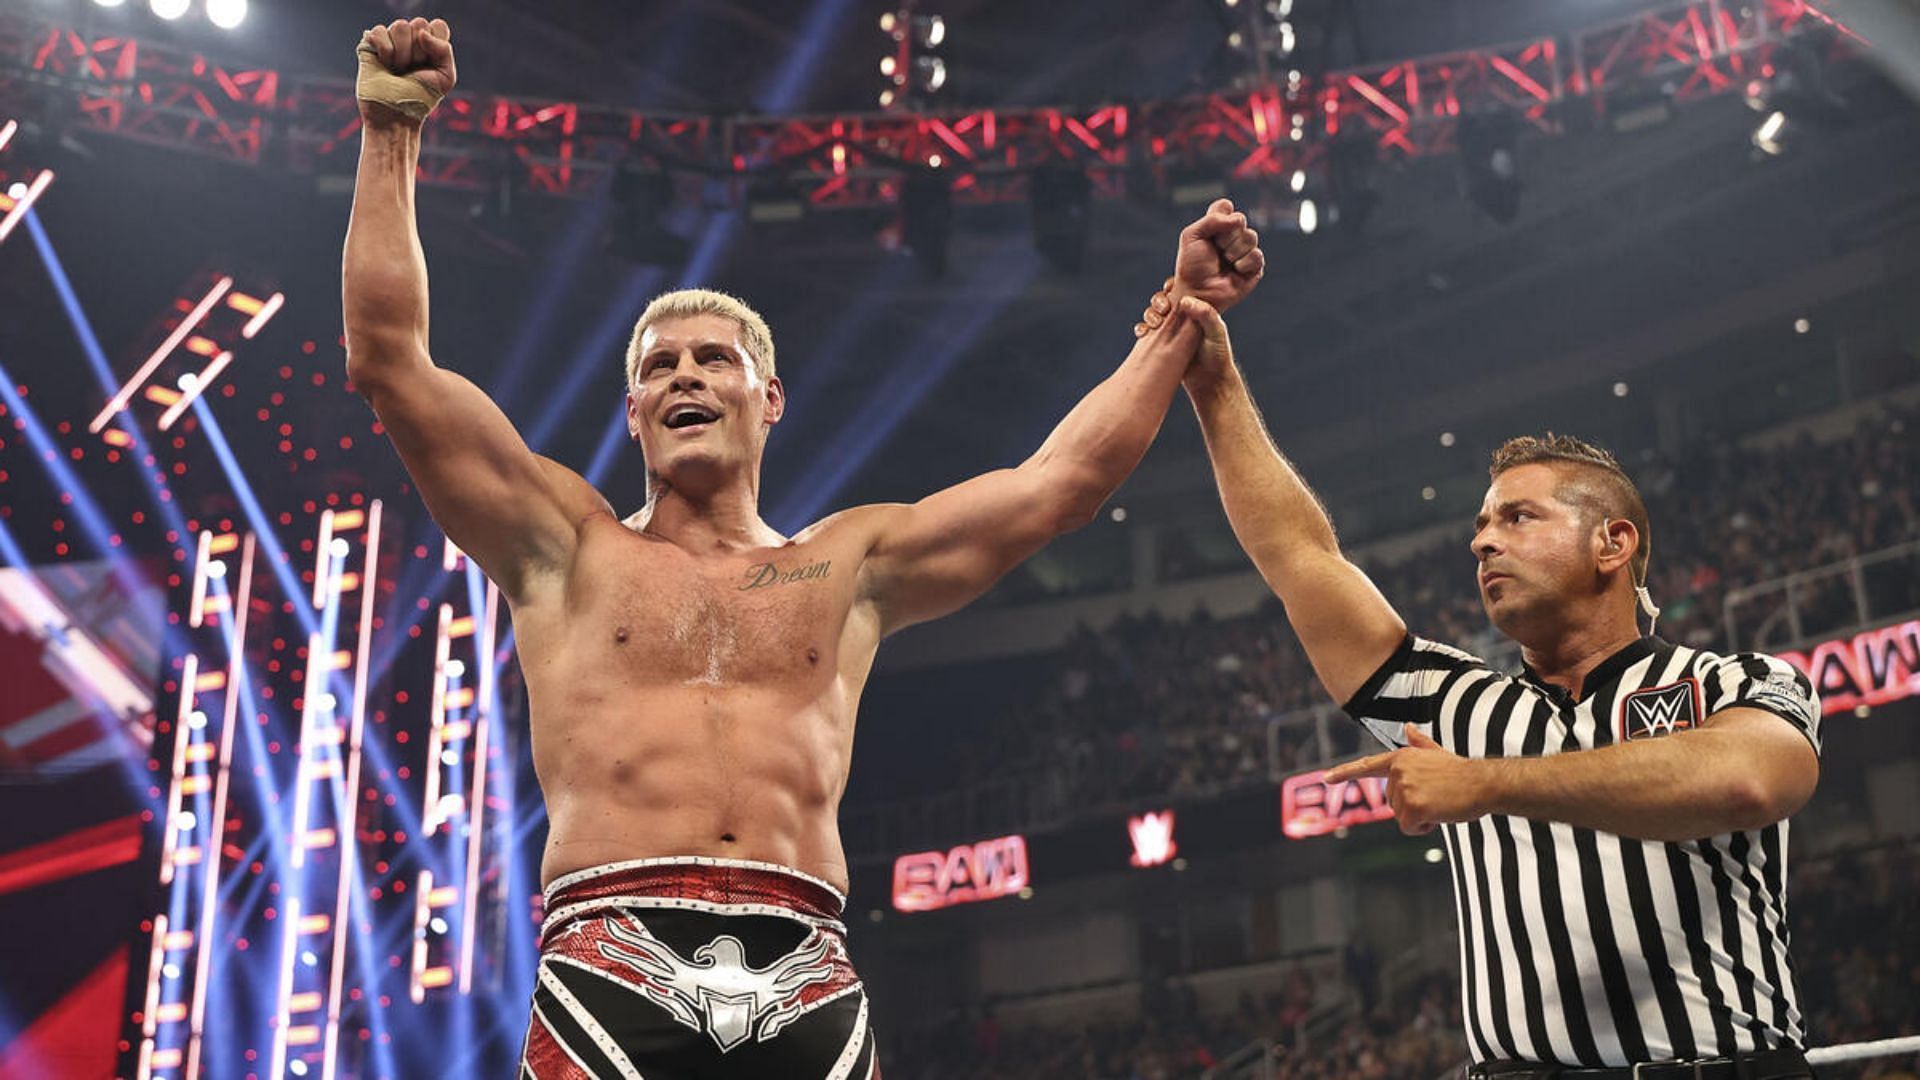 Cody Rhodes will challenge Undisputed WWE Universal Champion Roman Reigns at WrestleMania XL. (Photo Courtesy: WWE)